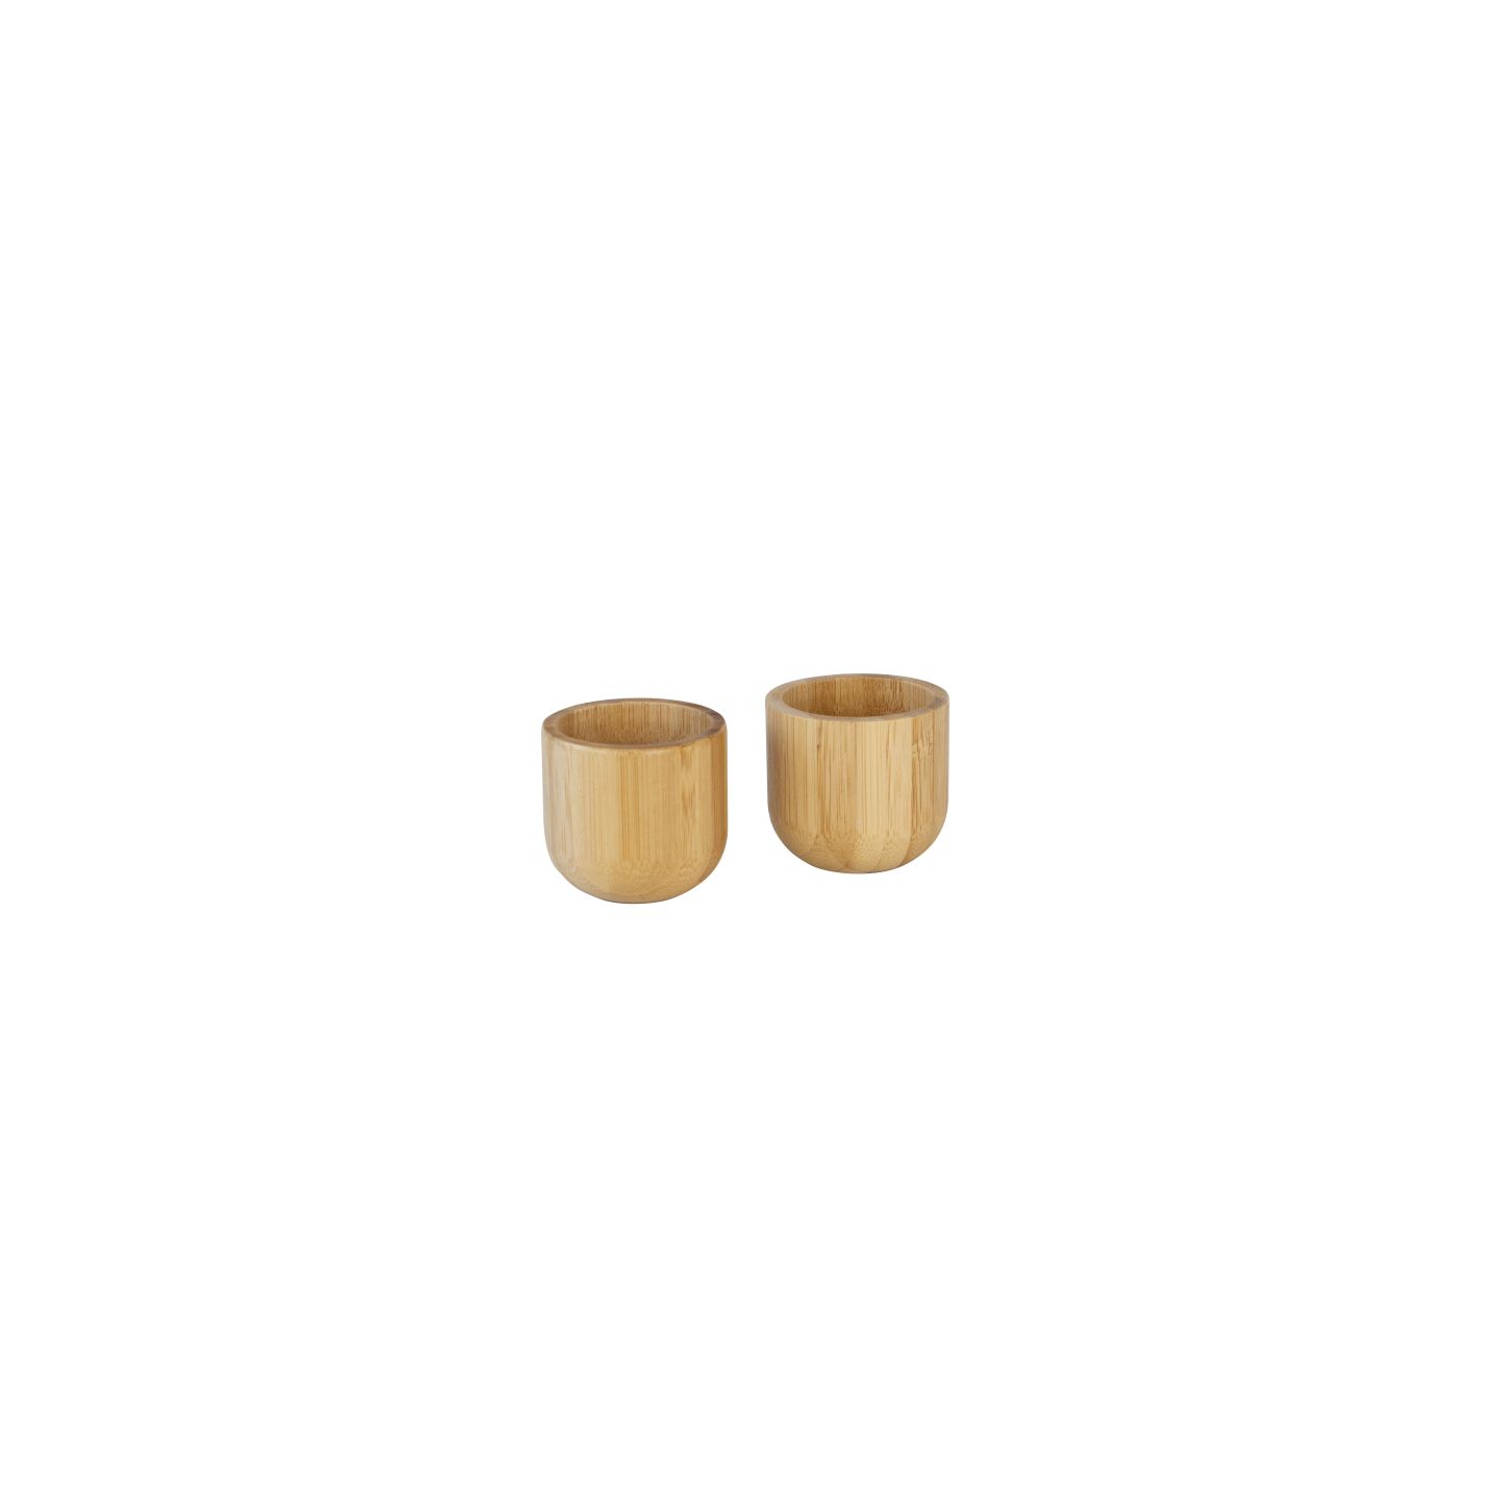 Pebbly - Eiderdopjes Bamboe Set van 2 Stuks - Bamboe - Transparant